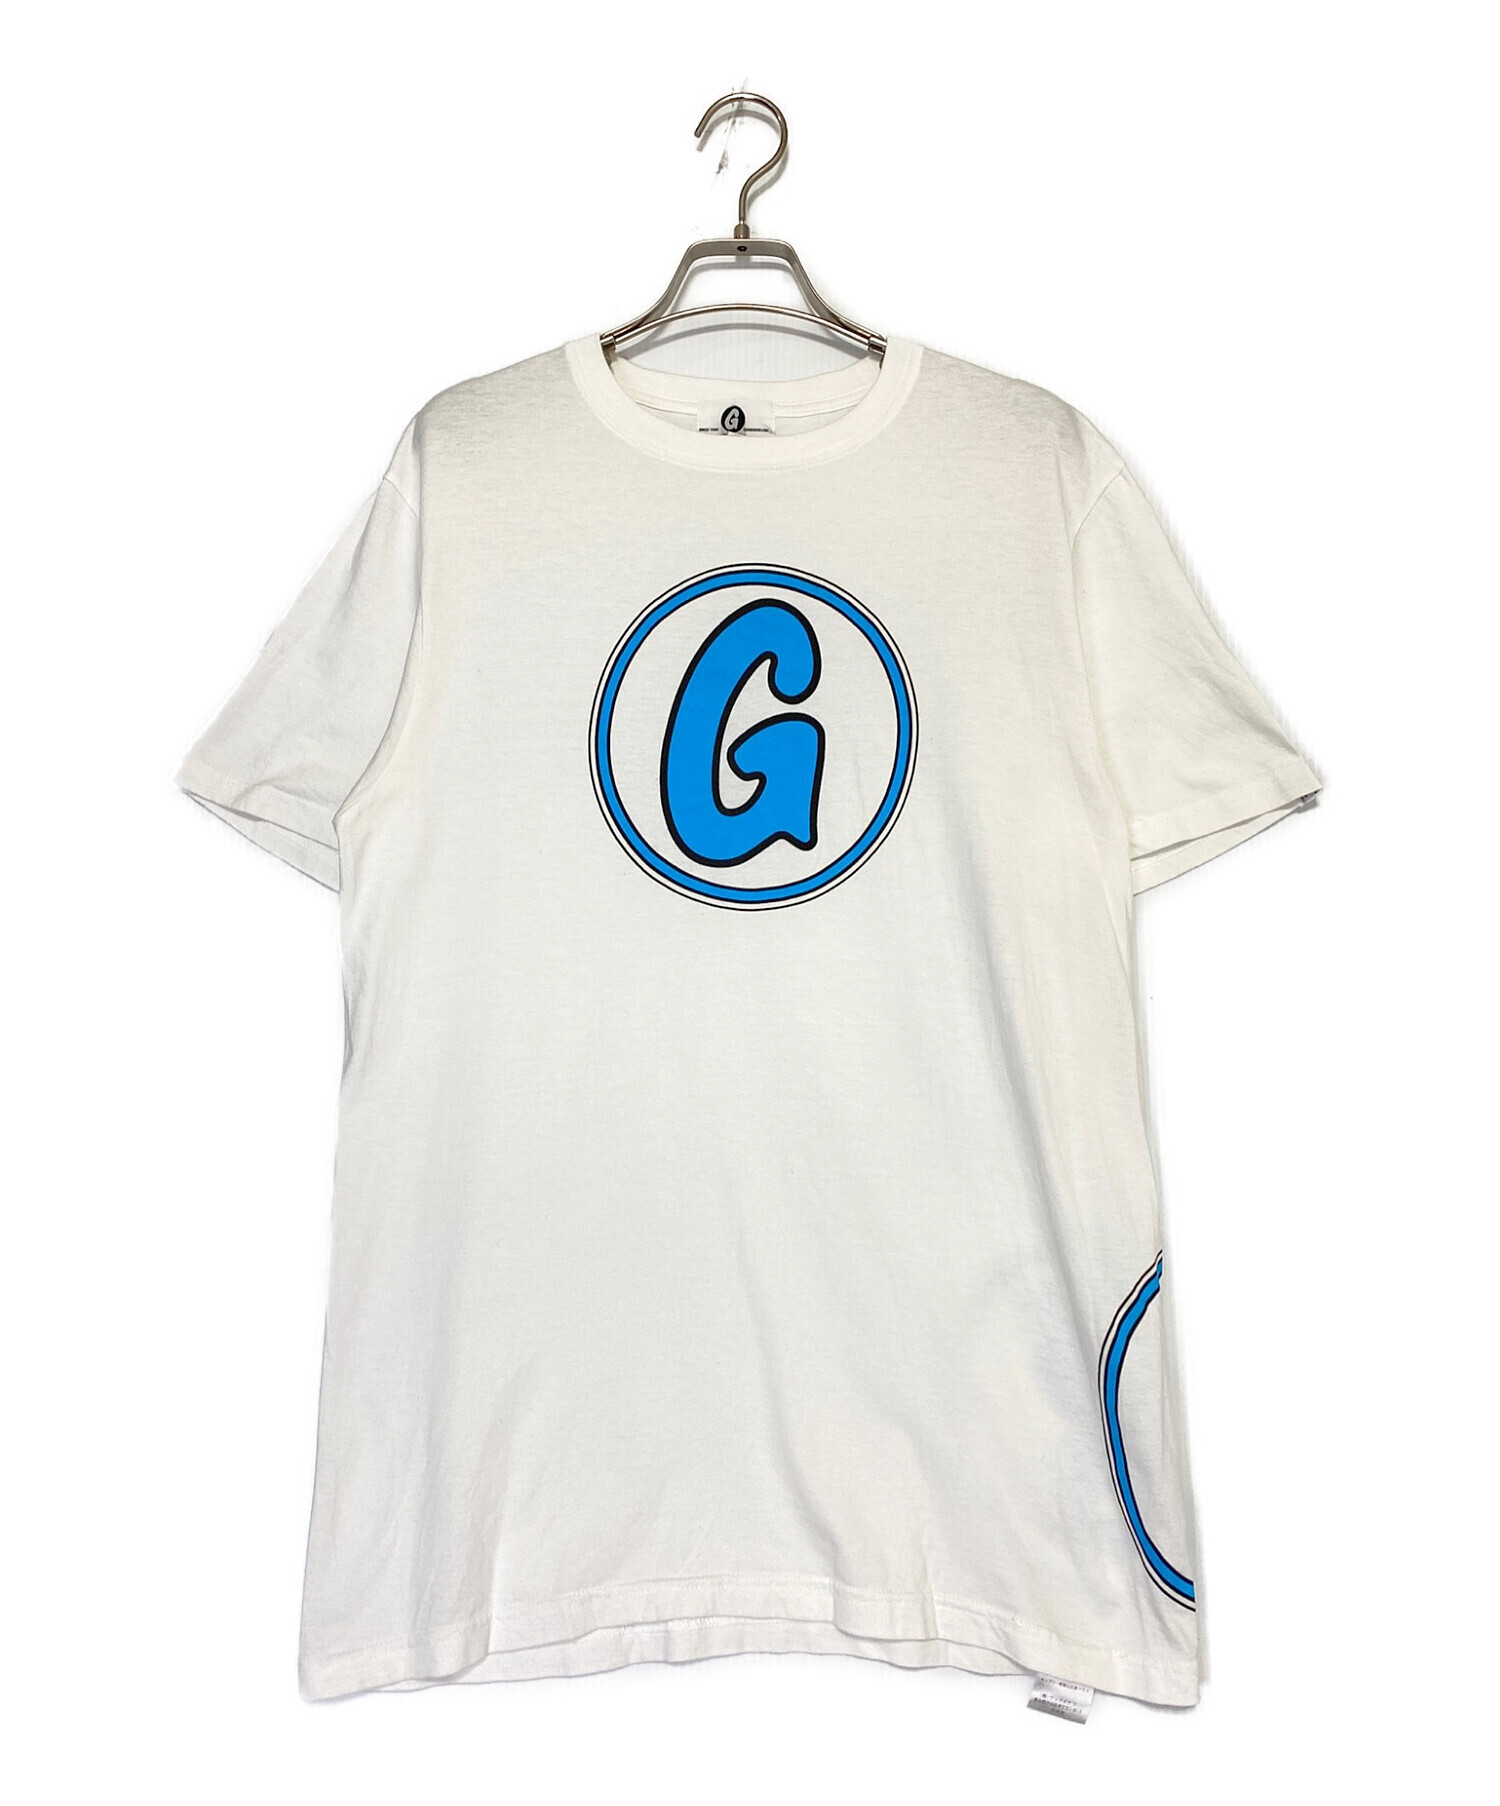 GOOD ENOUGH (グッドイナフ) サークルロゴ復刻Tシャツ ホワイト×ブルー サイズ:3